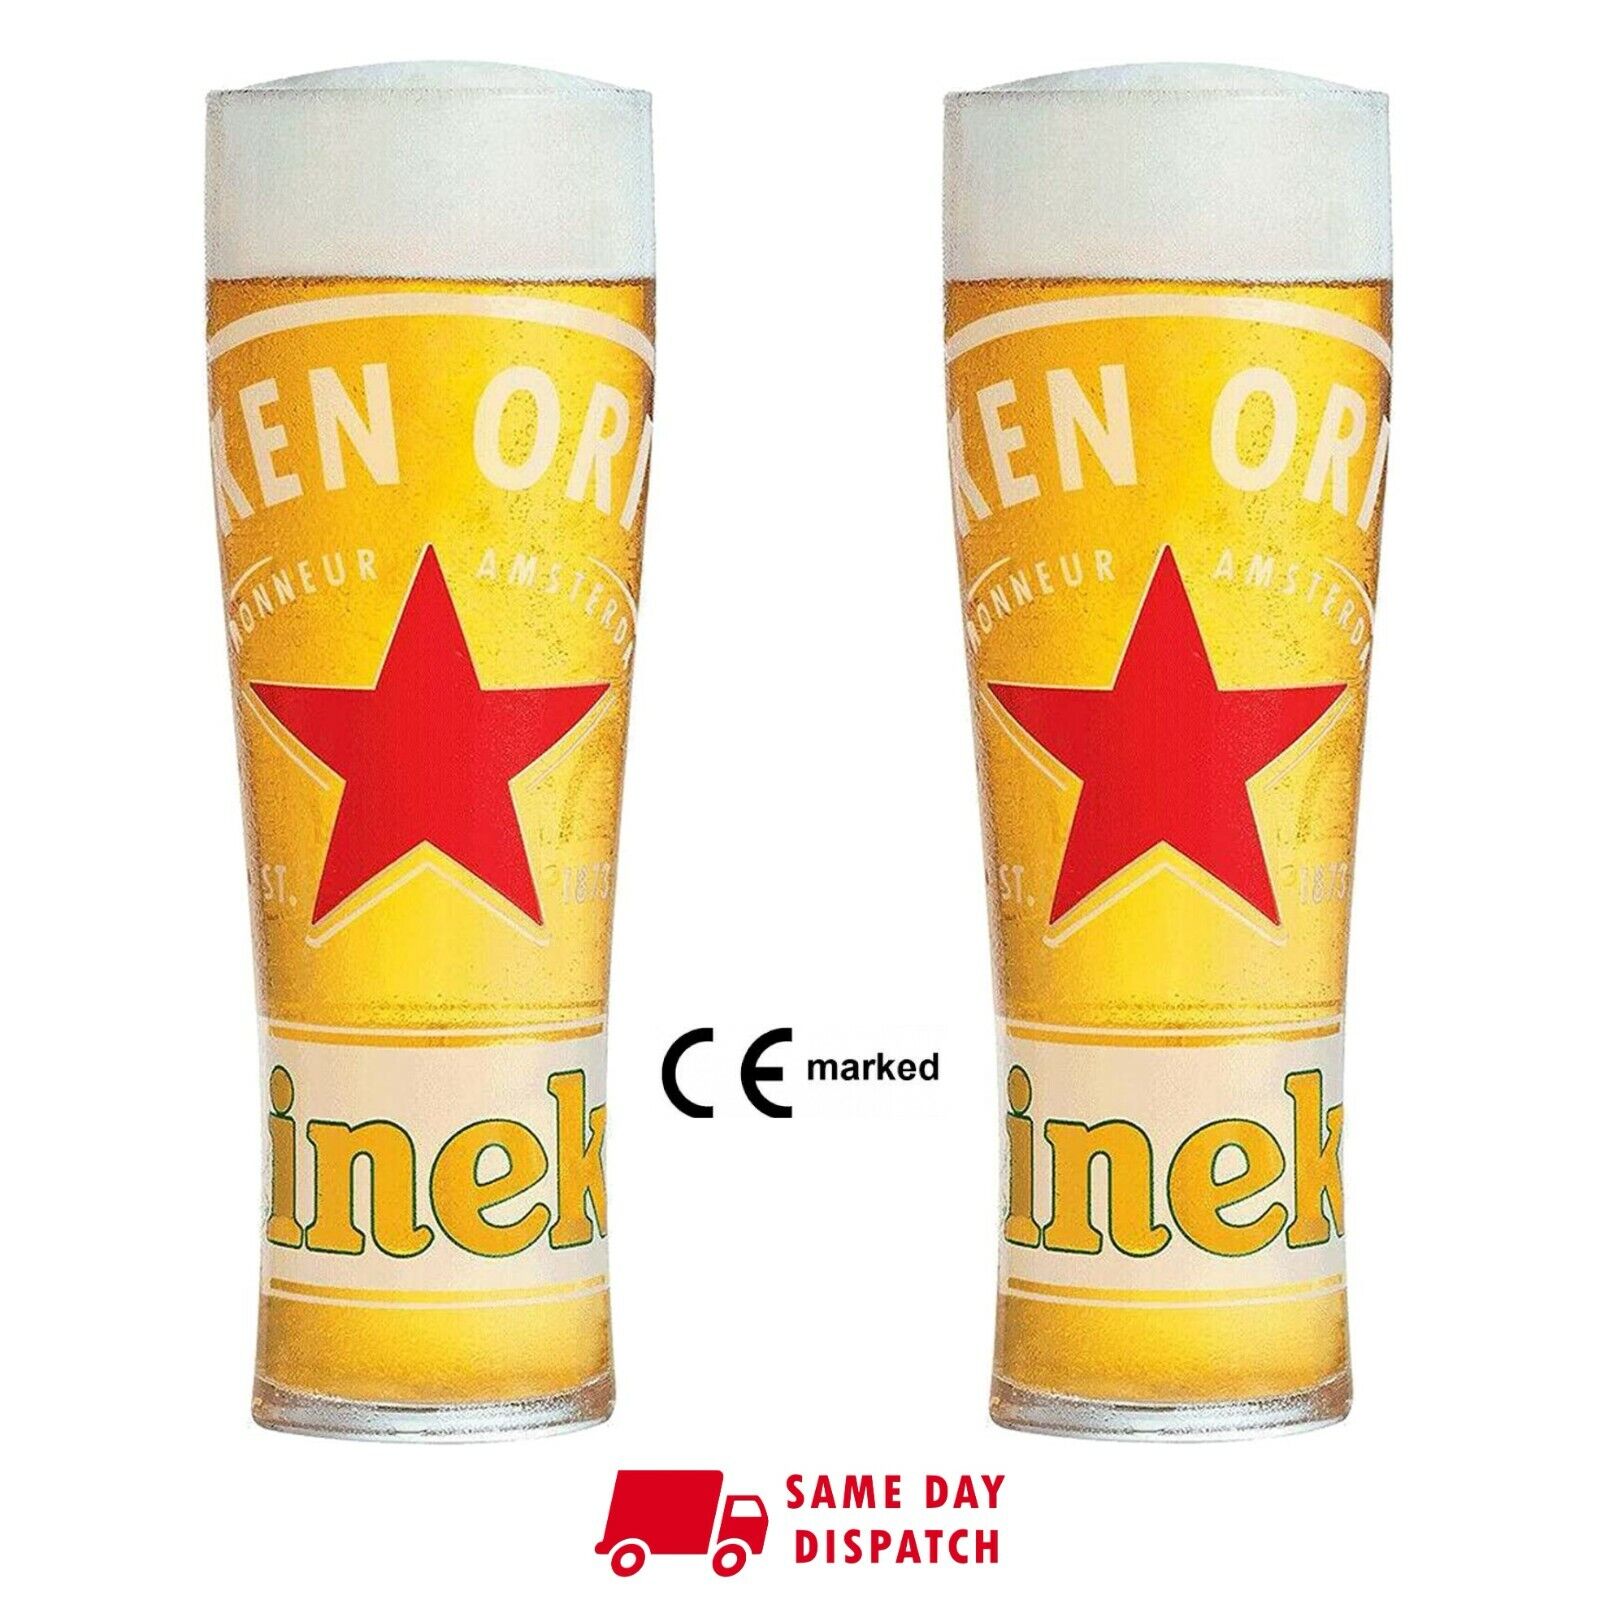 2 x Heineken Beer Pint Glasses, CE Marked Brand New 20oz 100% Genuine, Nucleated